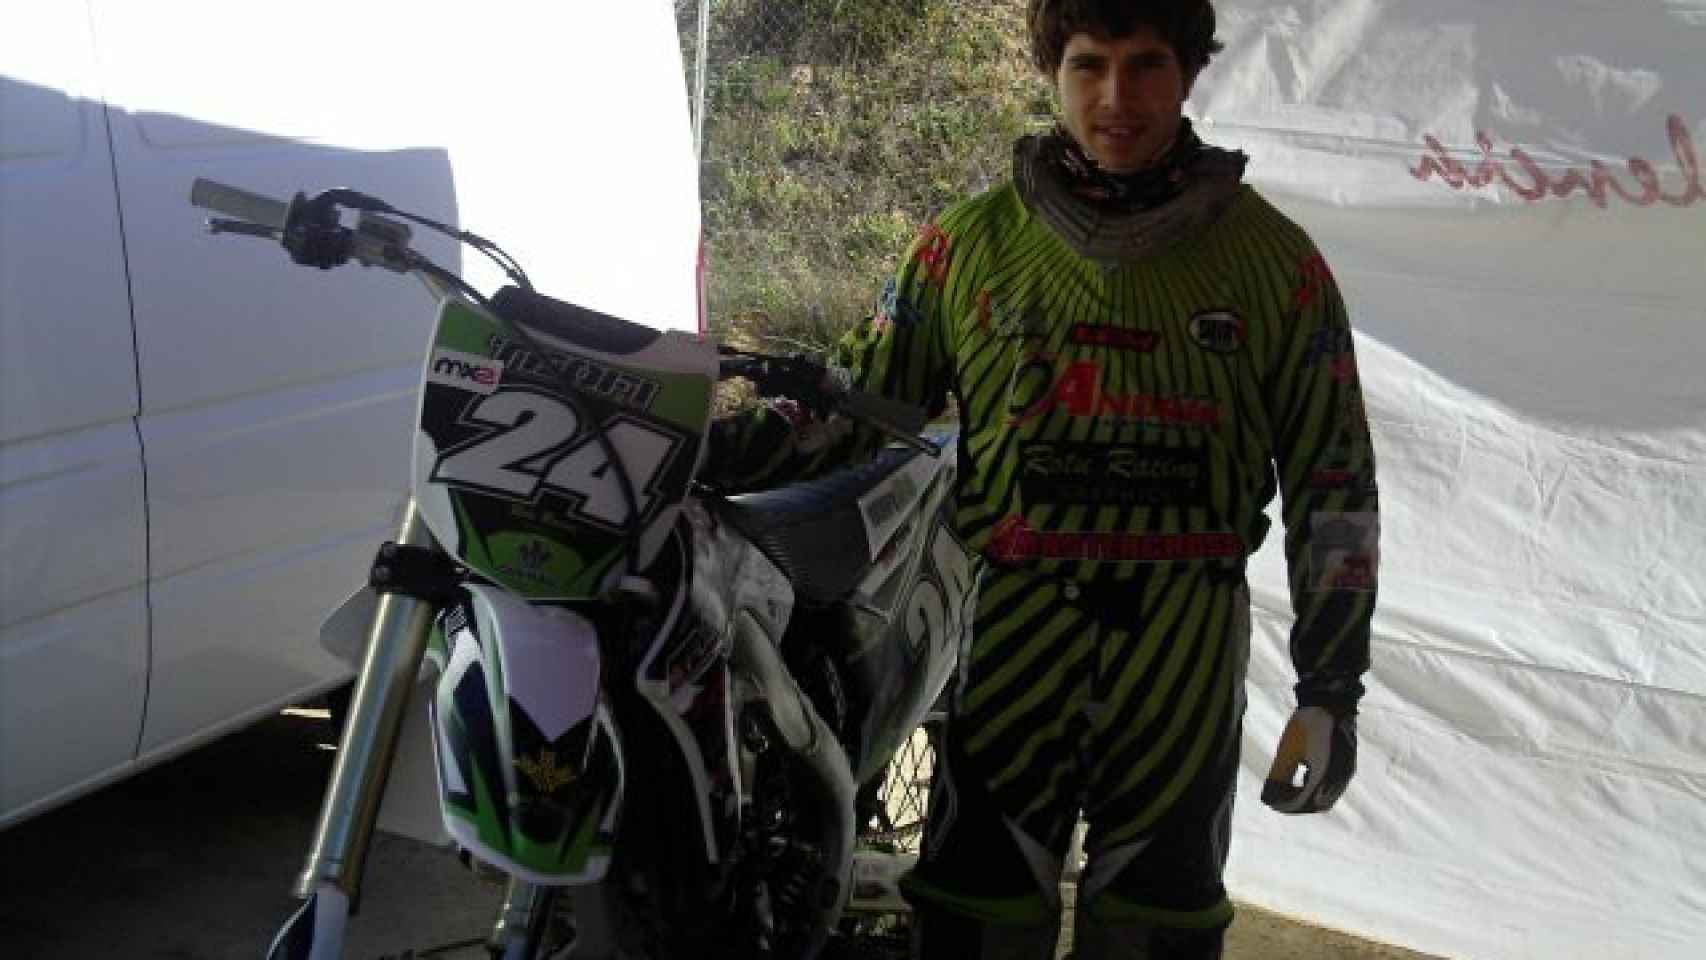 Un joven Teofi posa con su moto, momentos después de competir